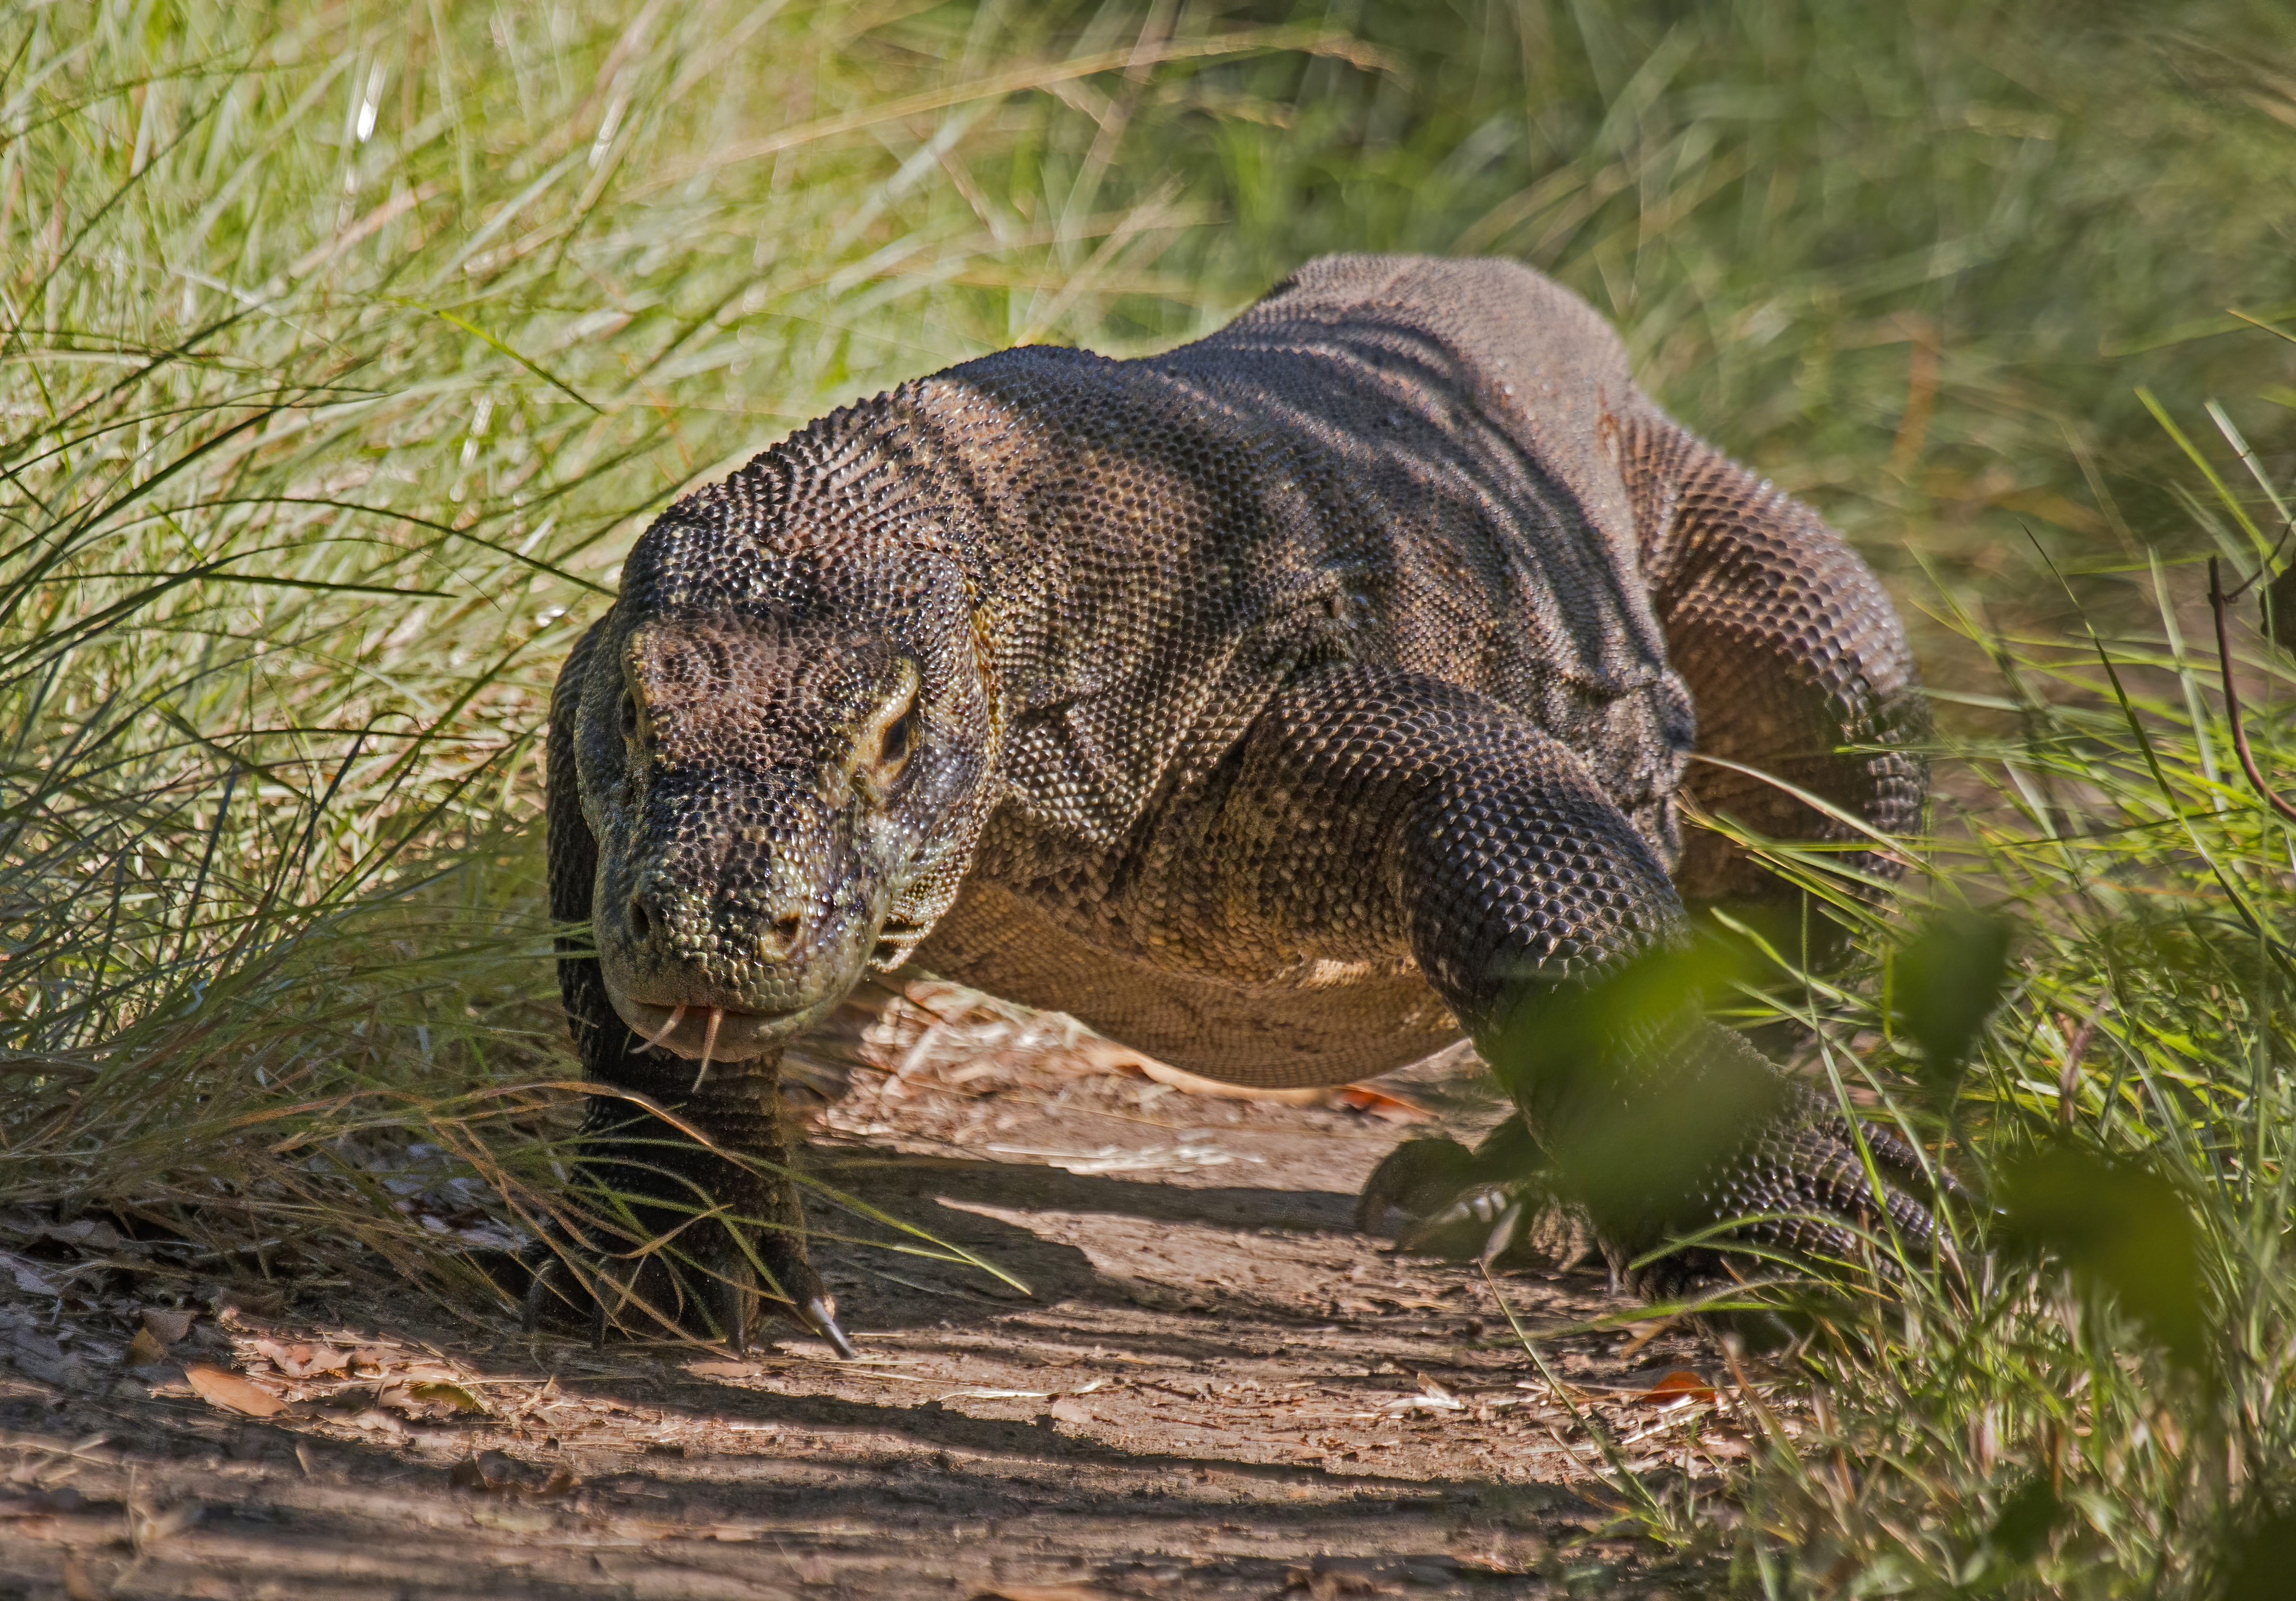 Is Komodo dragon mammal or reptile?